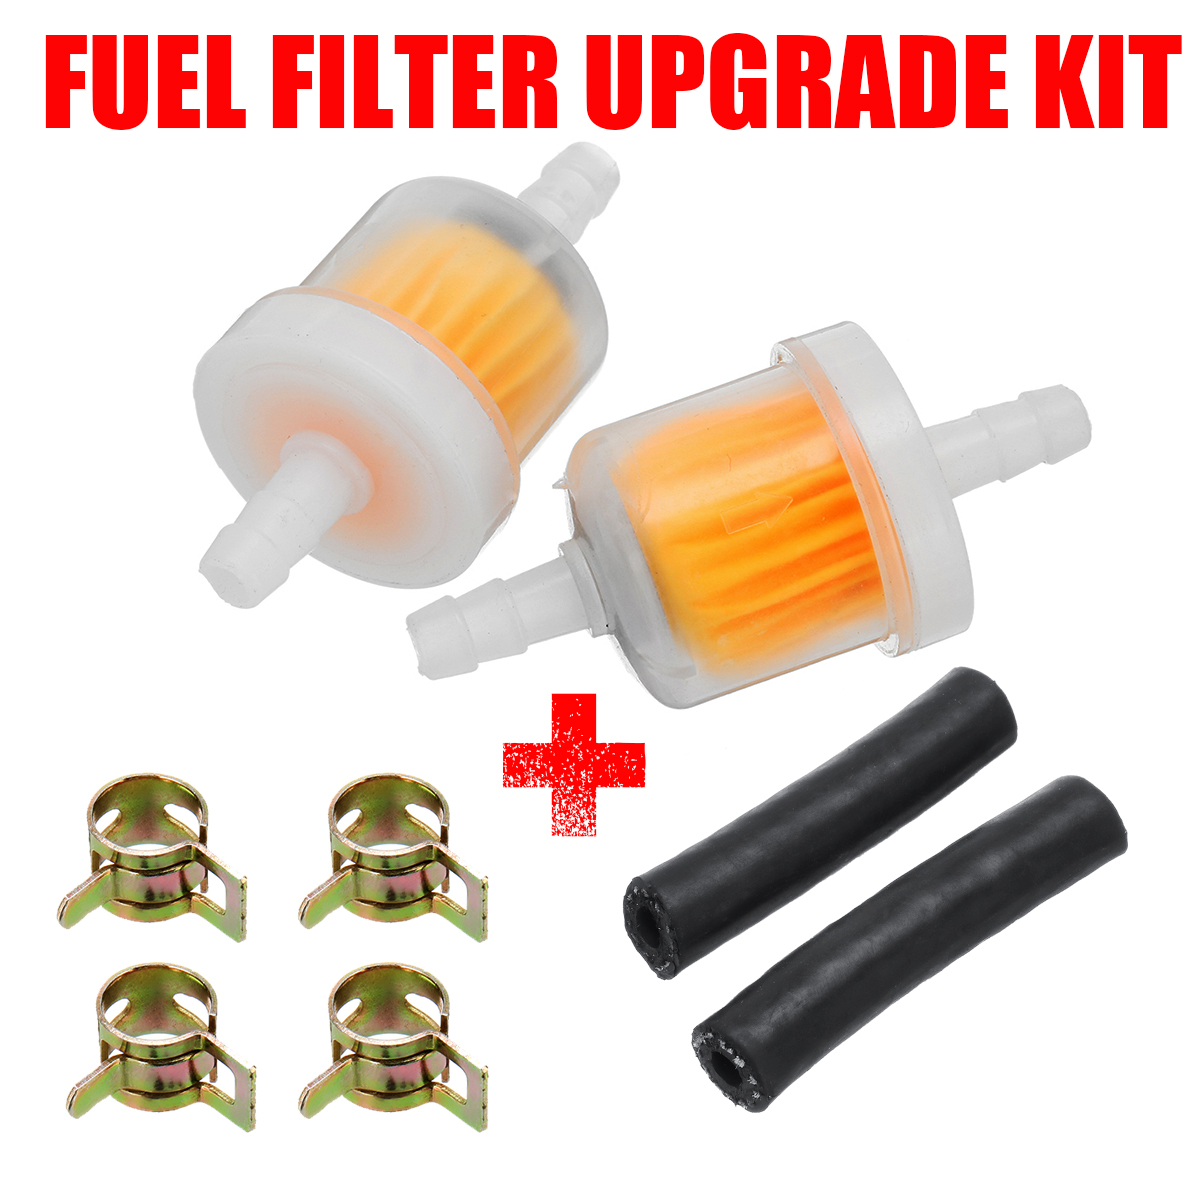 In-line-Fuel-Filter-Upgrade-Kit-For-Eberspacher-Webasto-Parking-Heater-Diesel-1410254